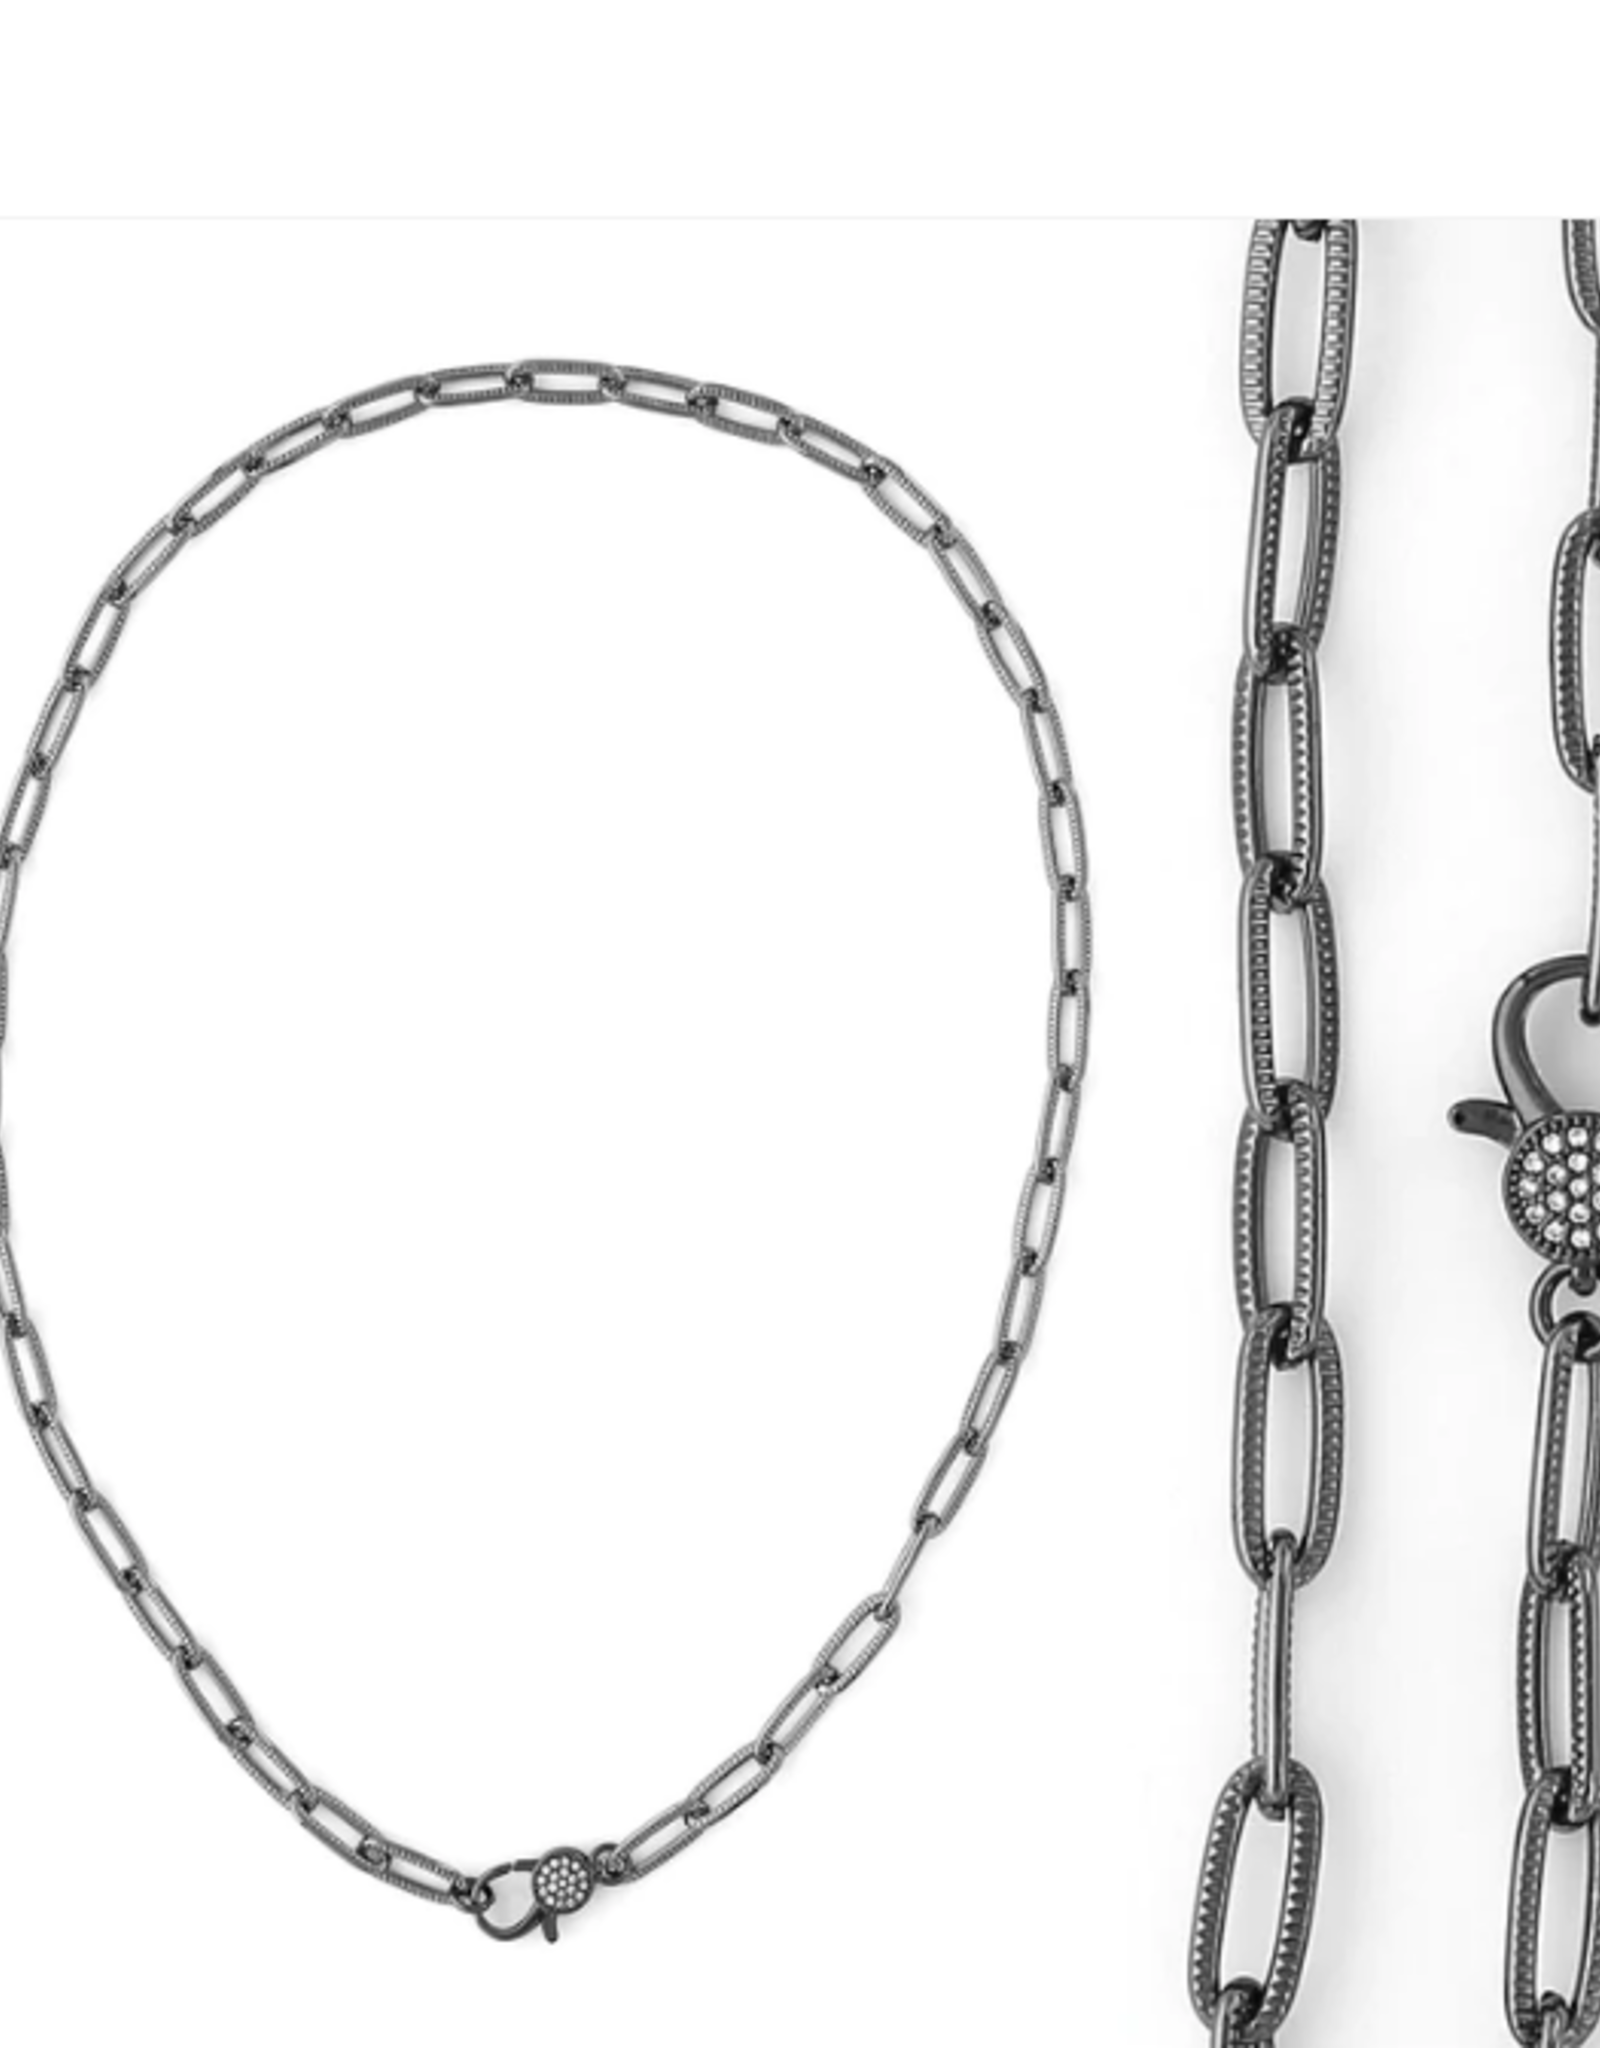 Gunmetal Textured Paper Clip Chain Necklace